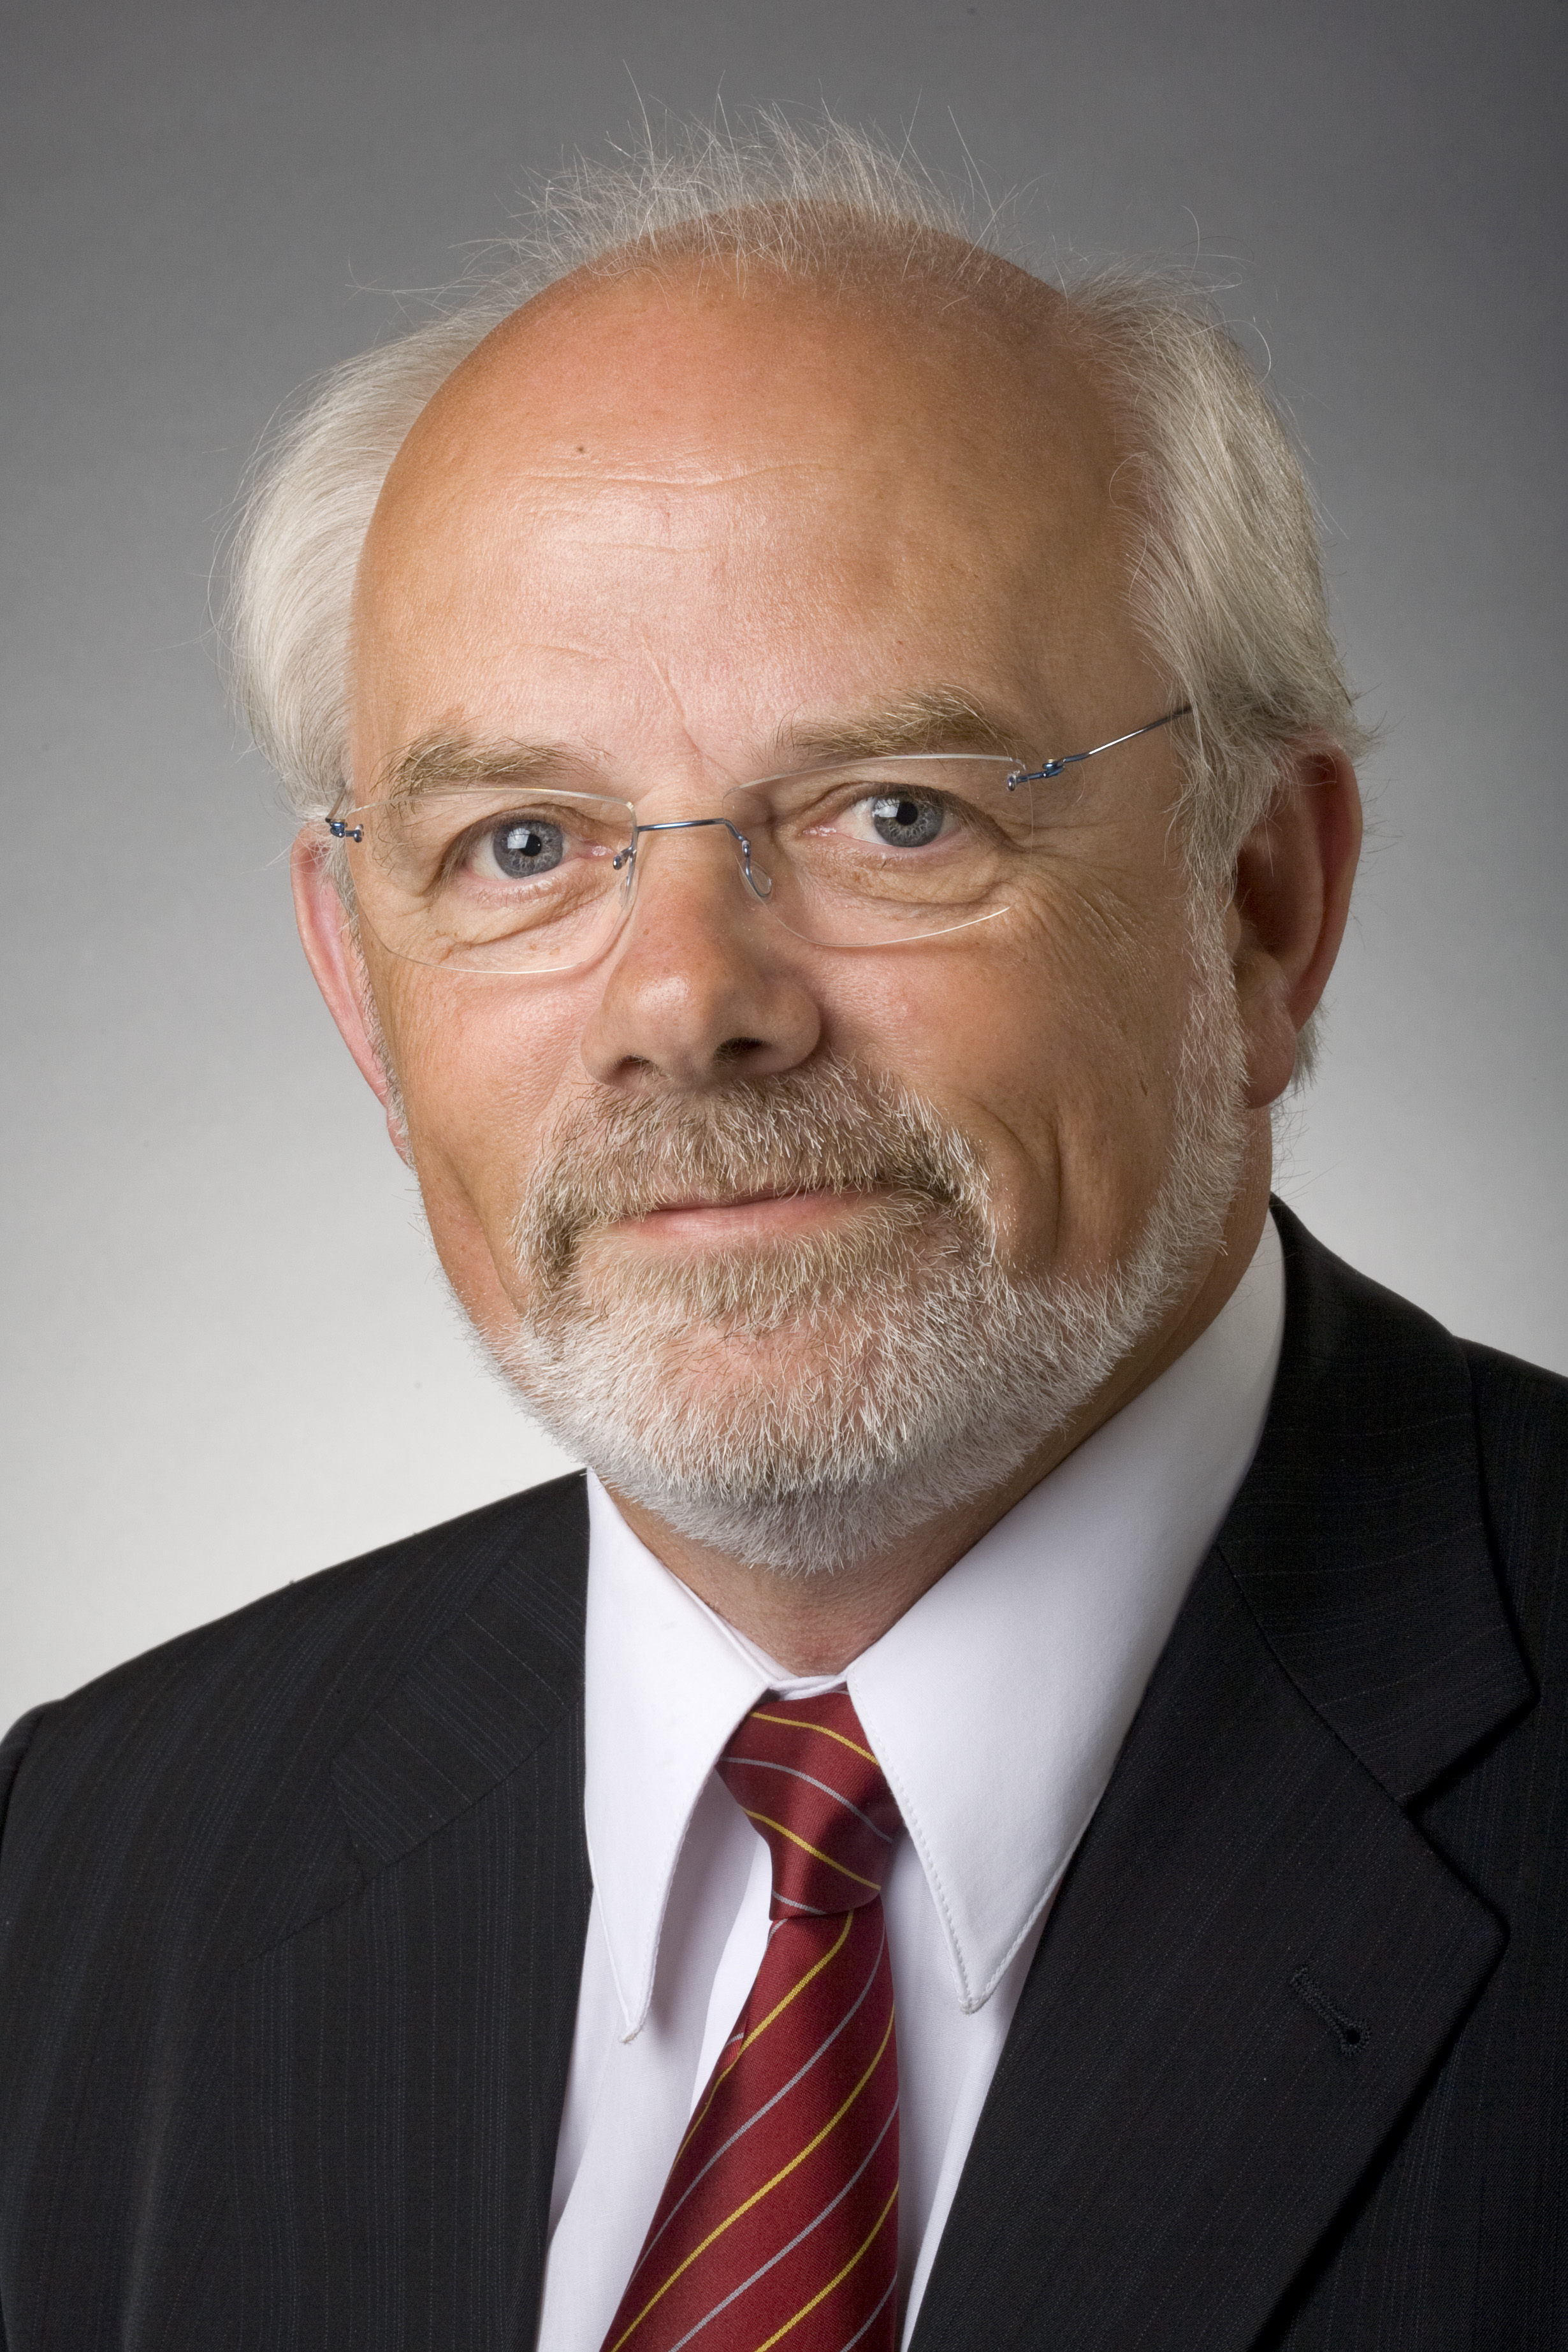 rektor Lauritz B. Holm-Nielsen